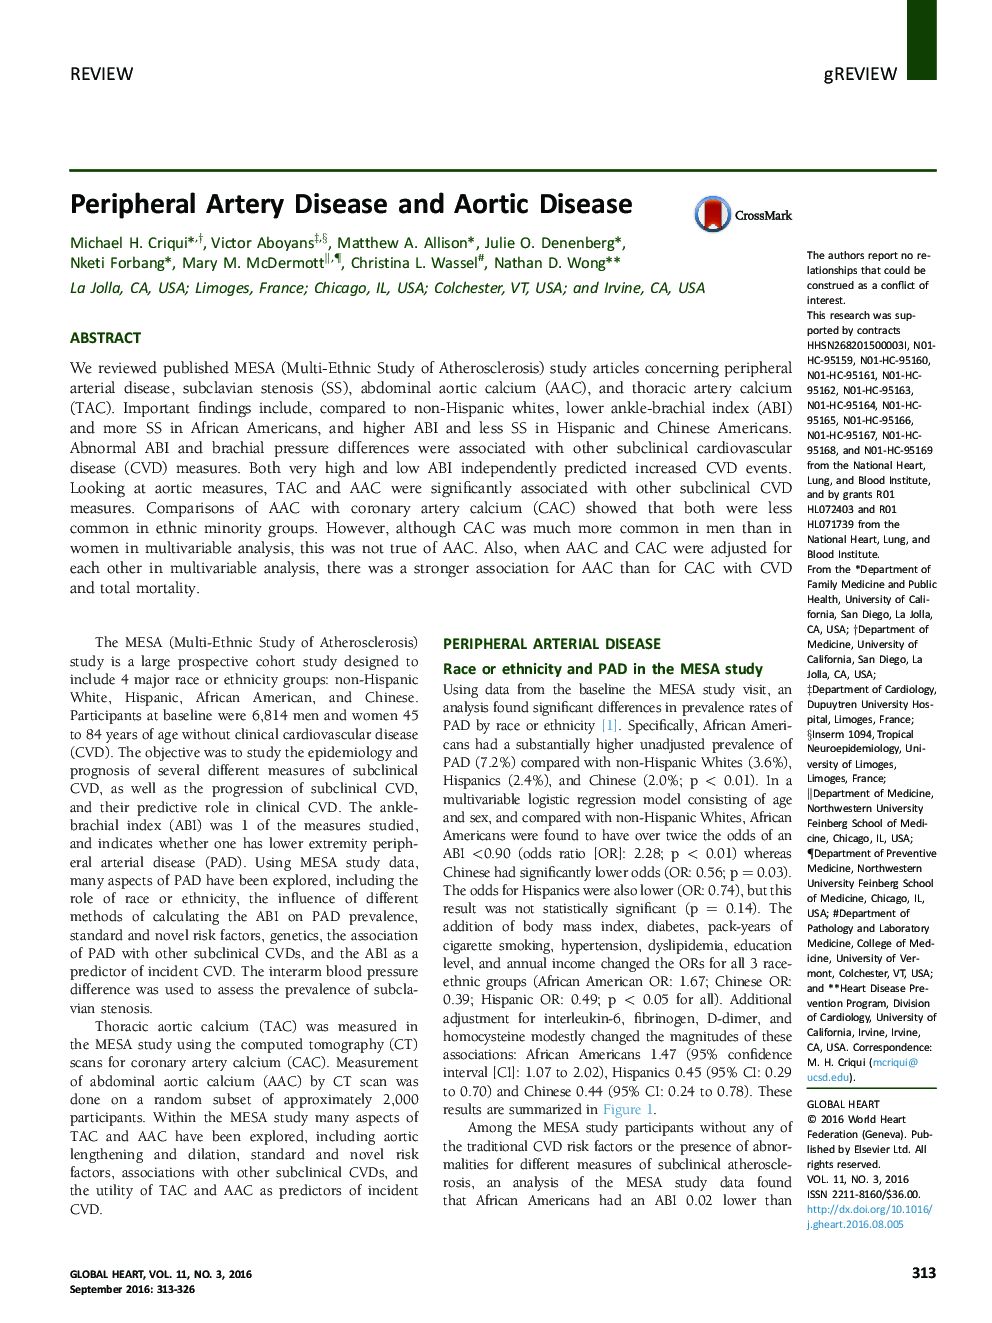 Peripheral Artery Disease and Aortic Disease